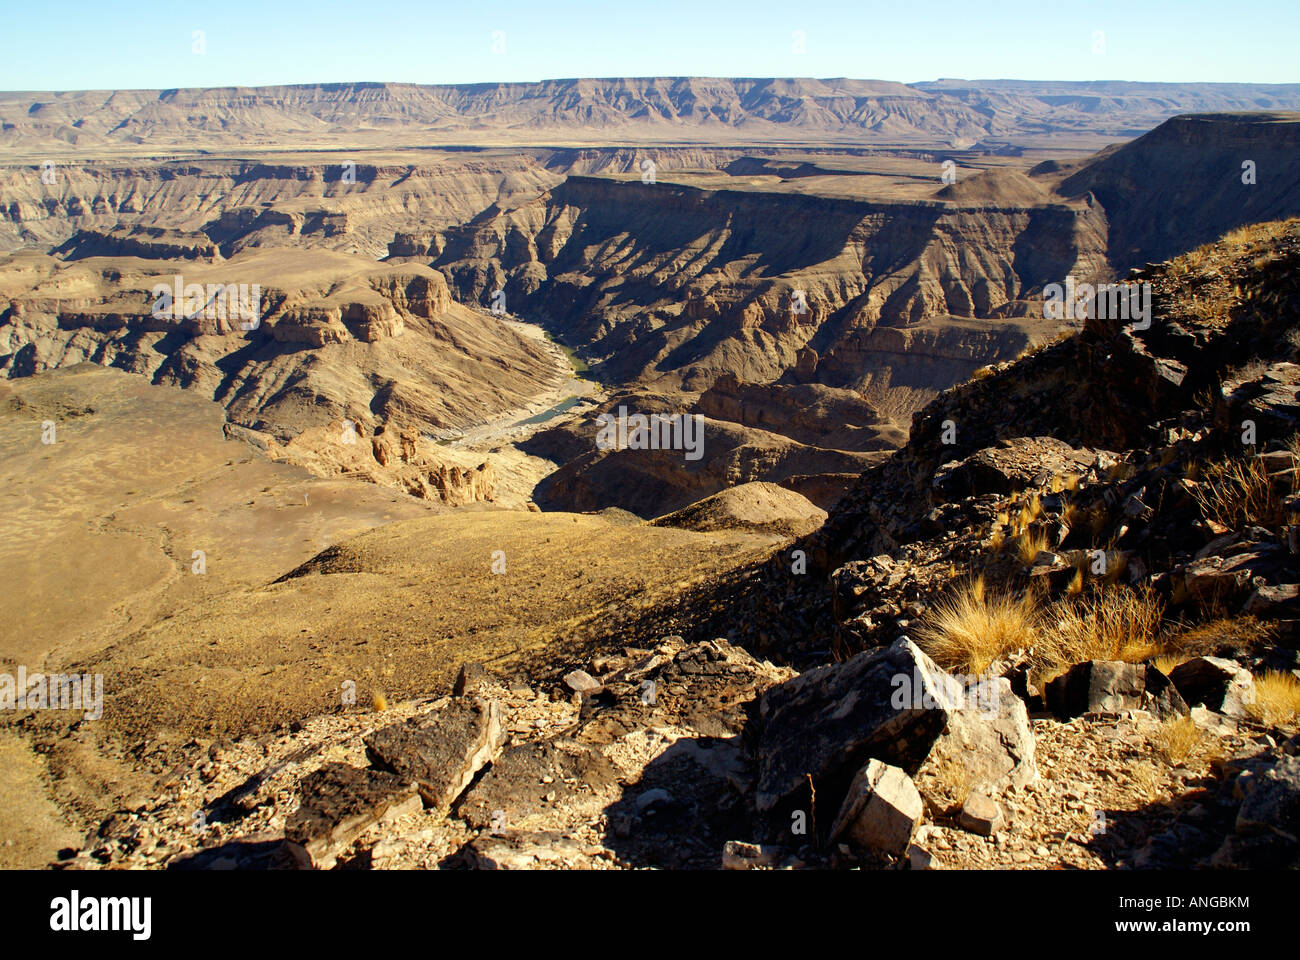 Fish River Canyon im Ai-Ais und Fish River Canyon Park im Süden Namibias Stockfoto